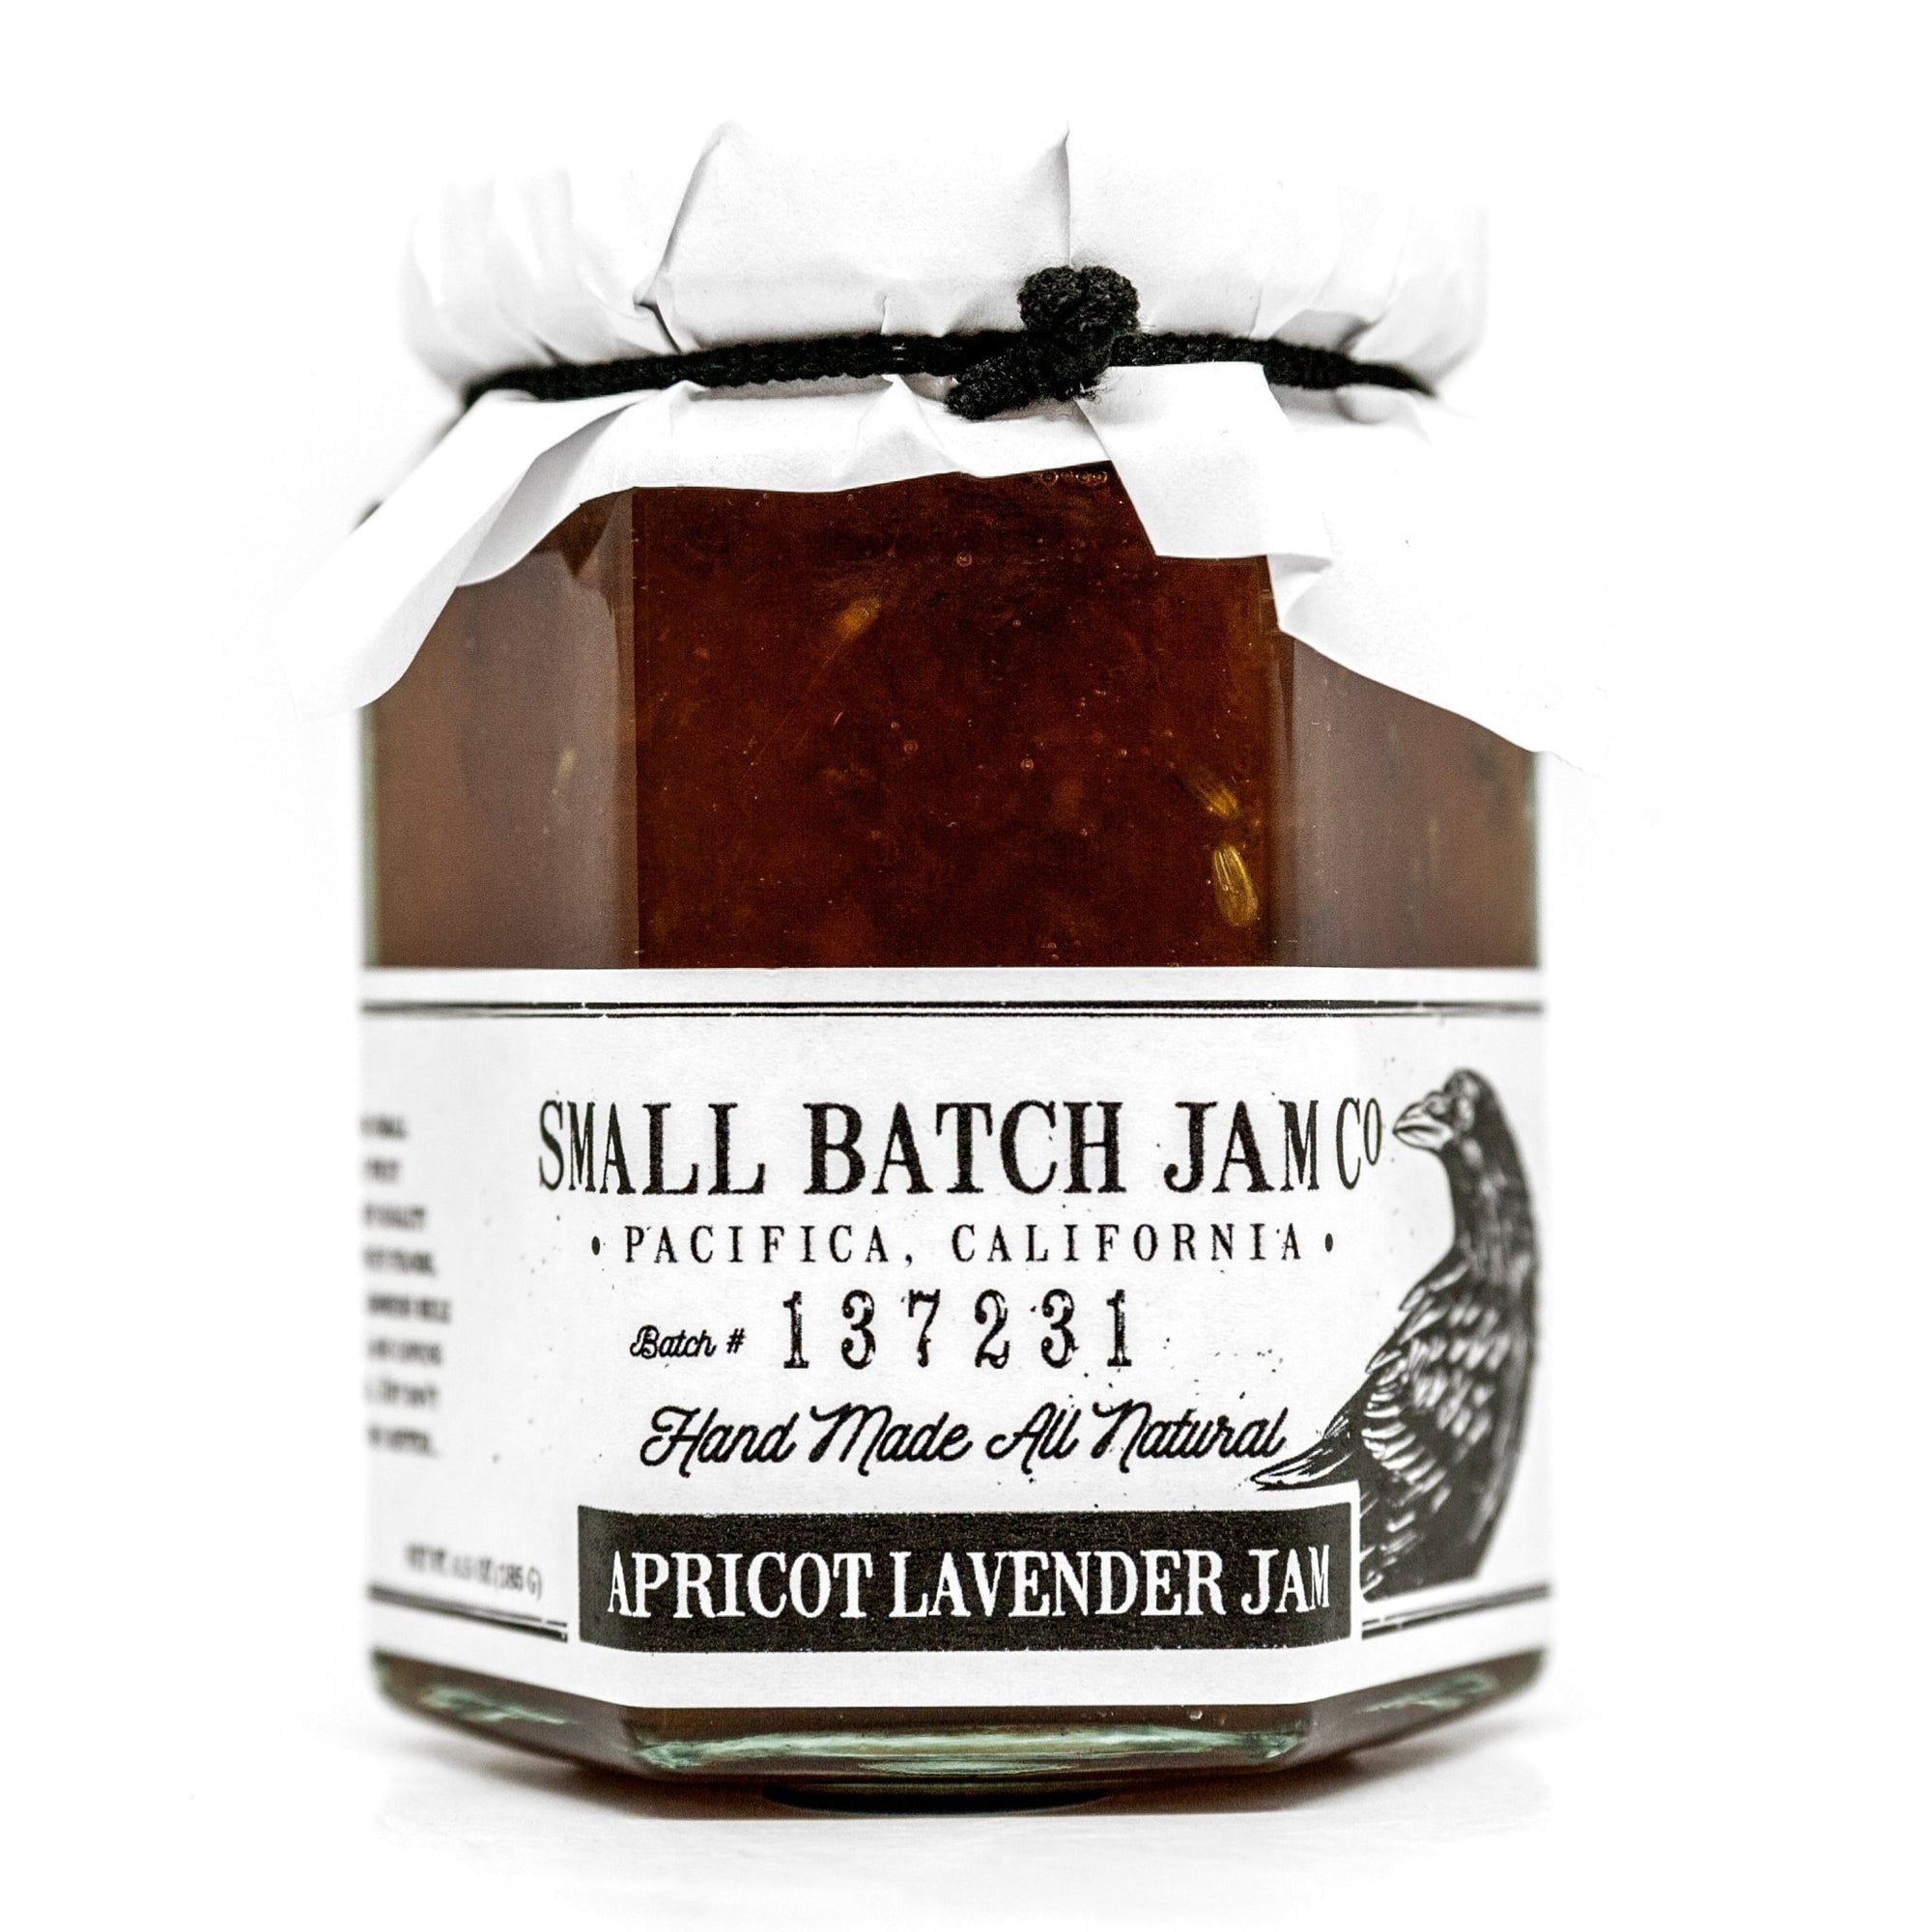 Apricot Lavender Jam - Small Batch Jam Co